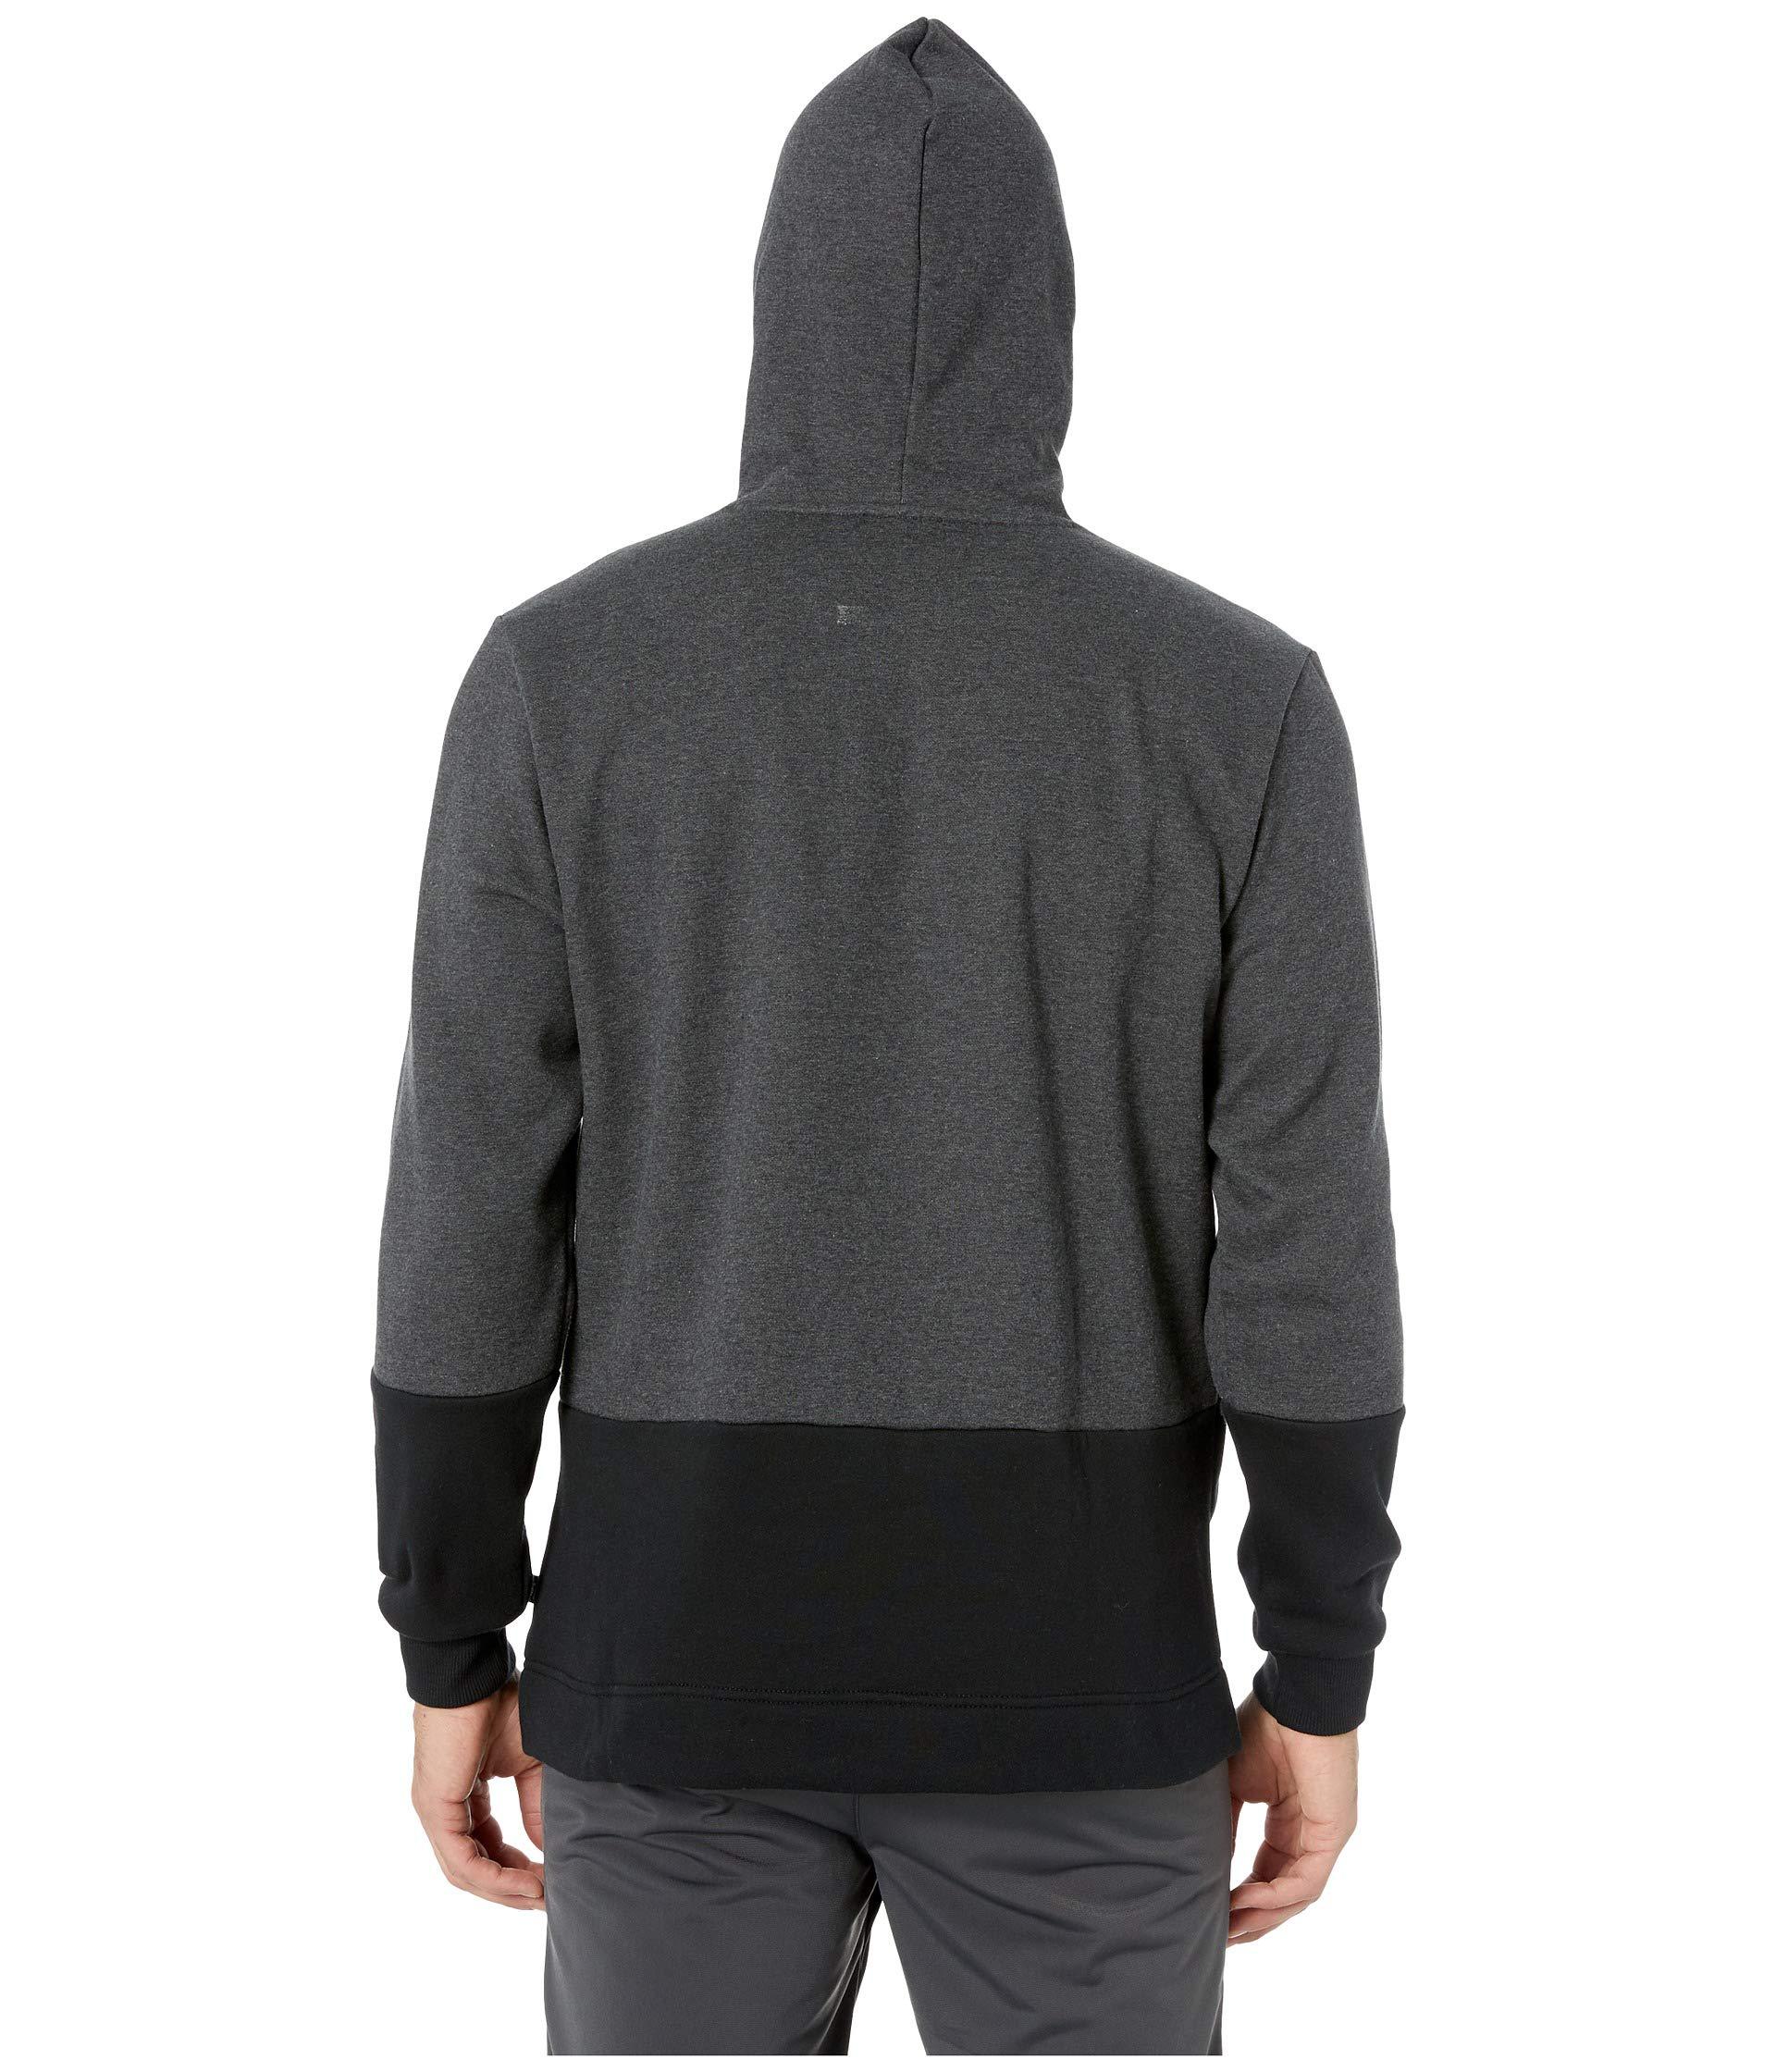 dark grey puma hoodie